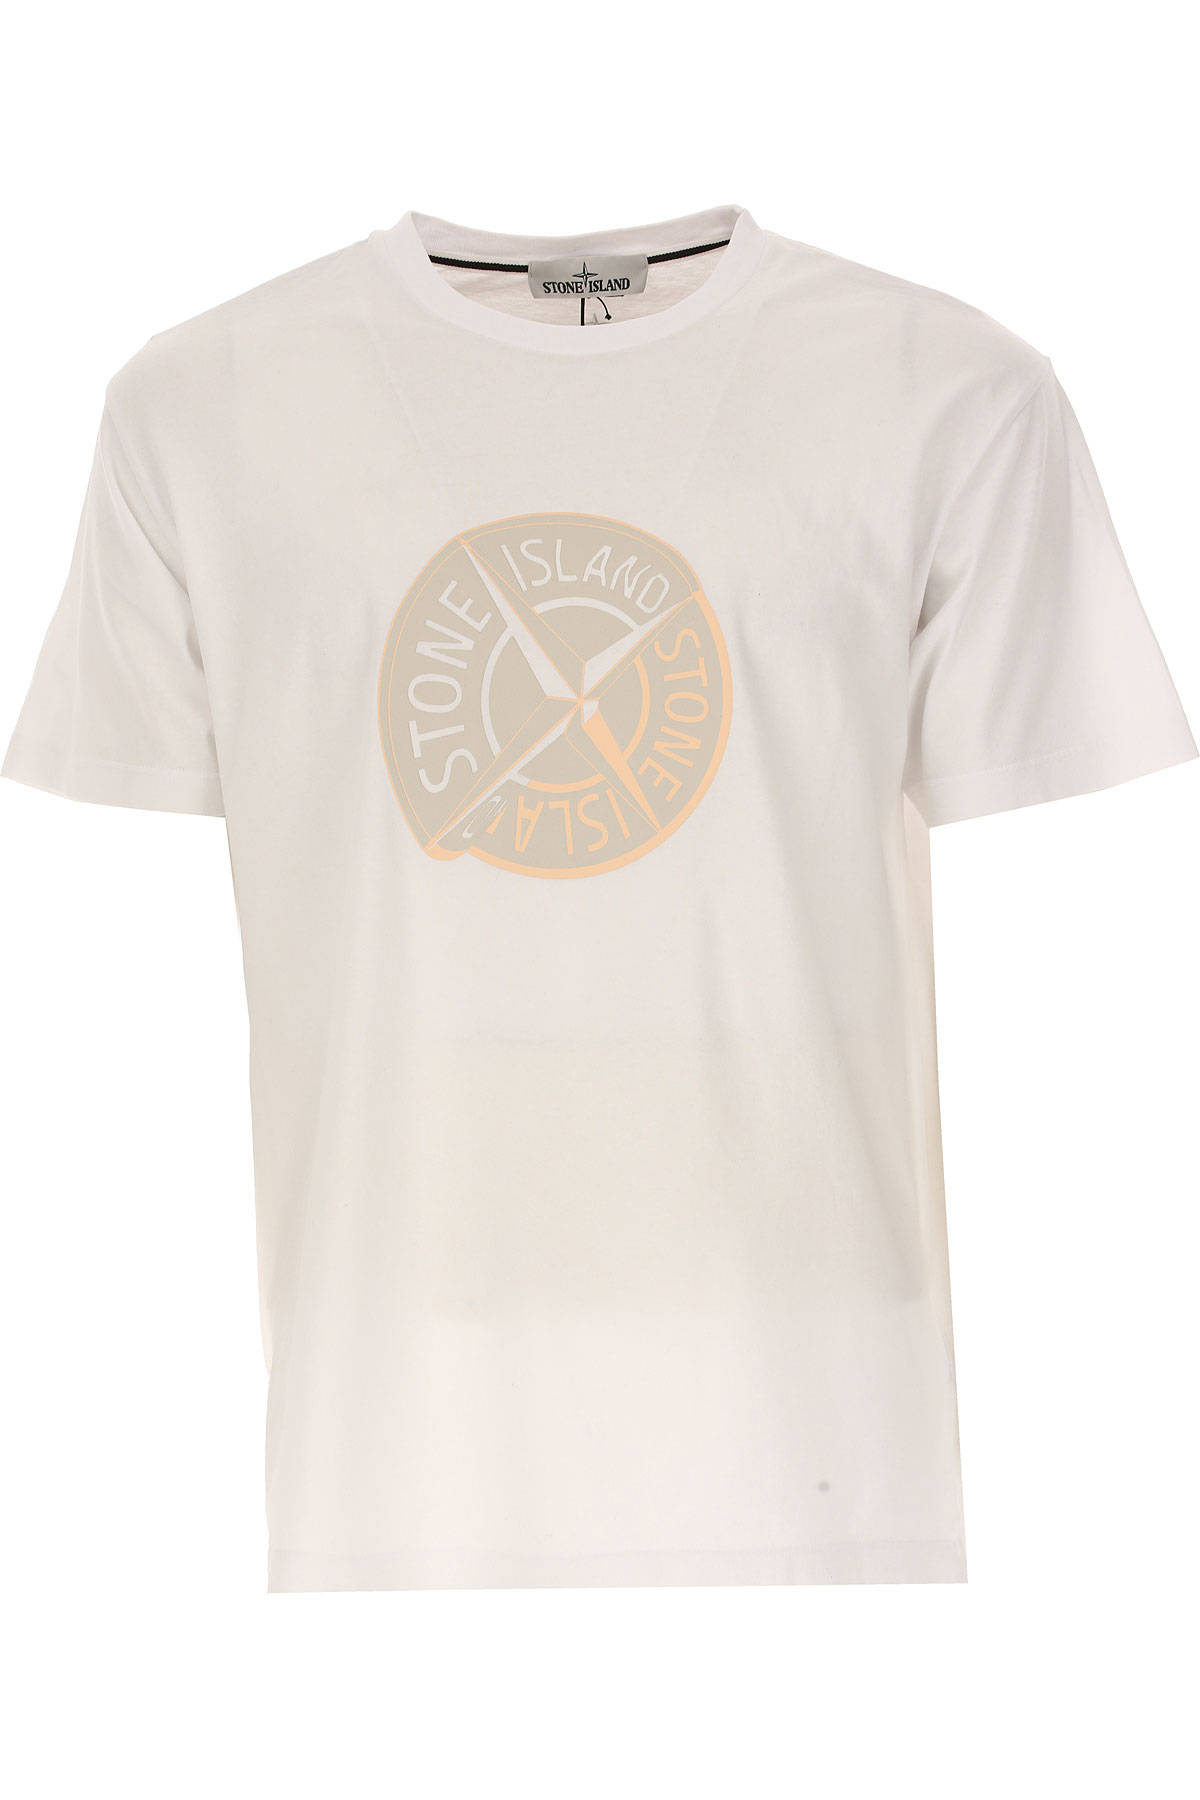 Stone Island T-shirt Homme, Blanc, Coton, 2017, L M S XL